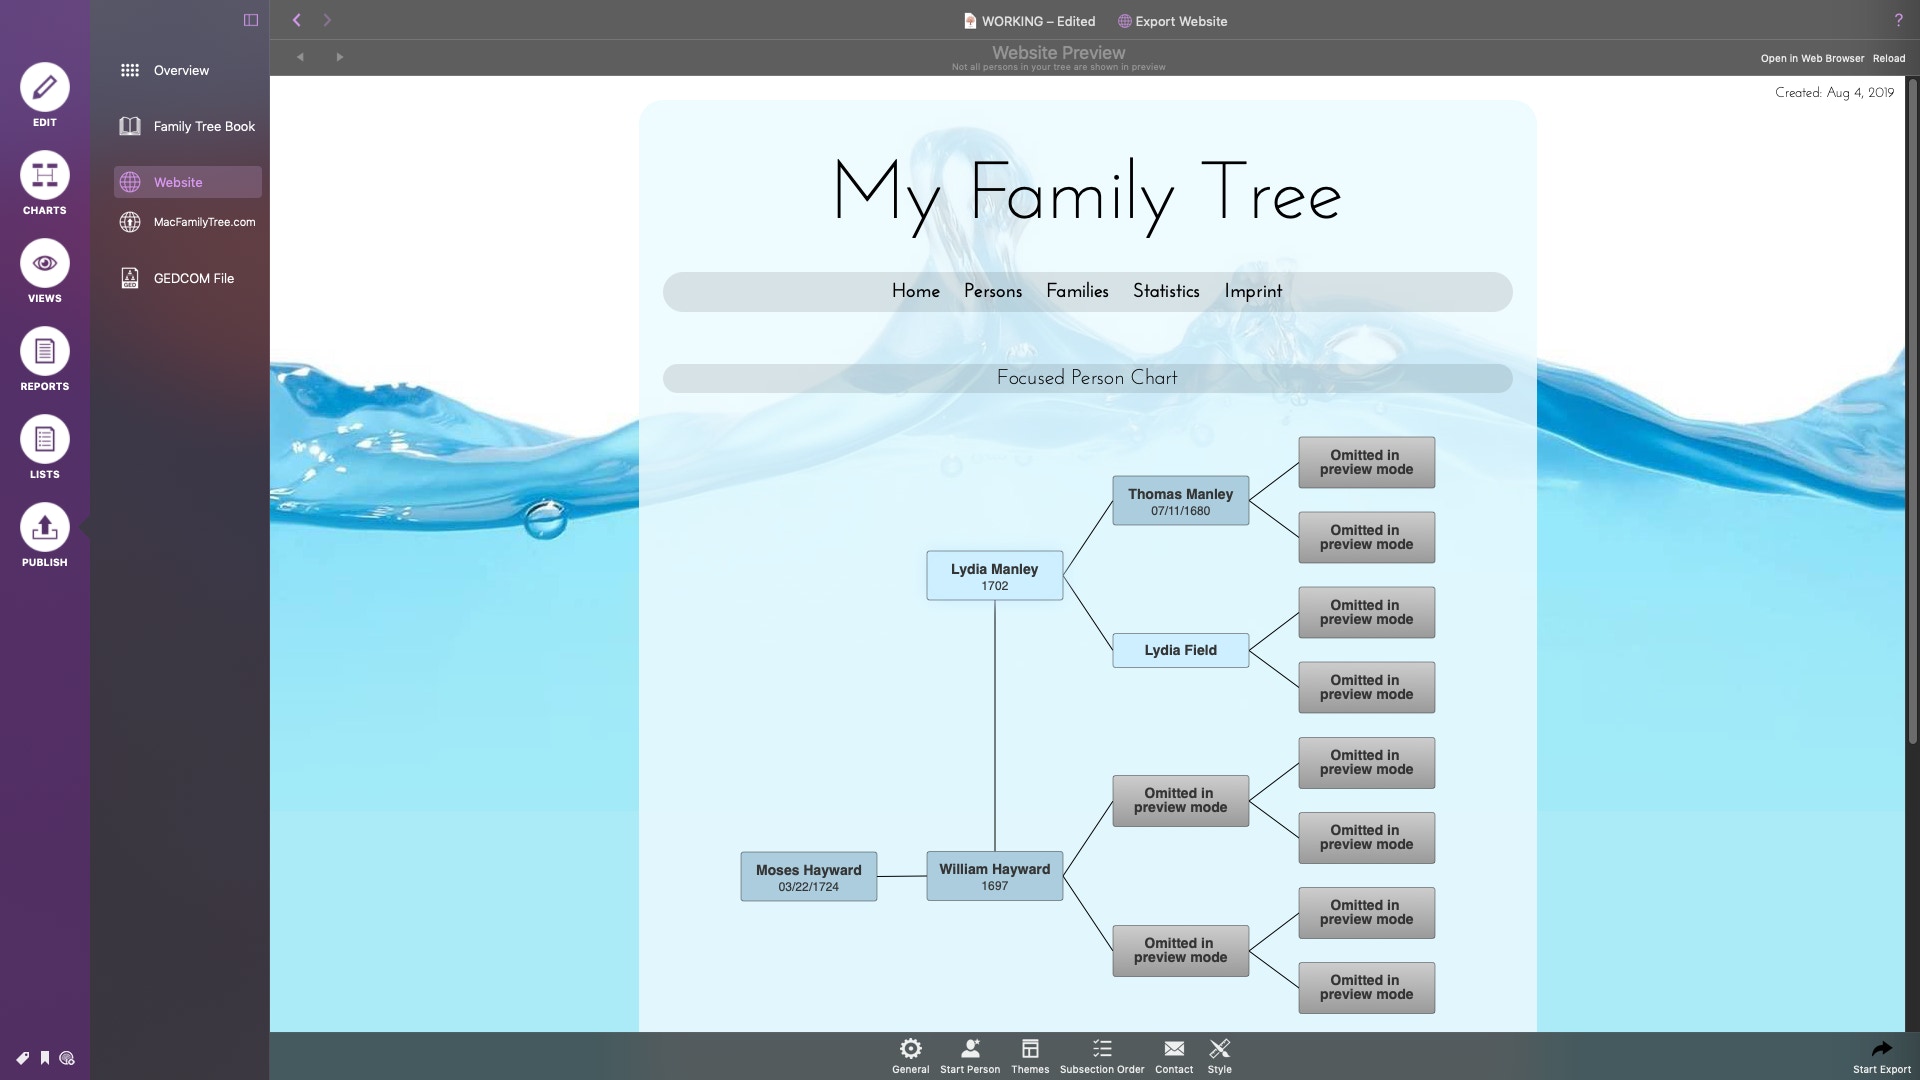 macfamilytree add image to startup screen